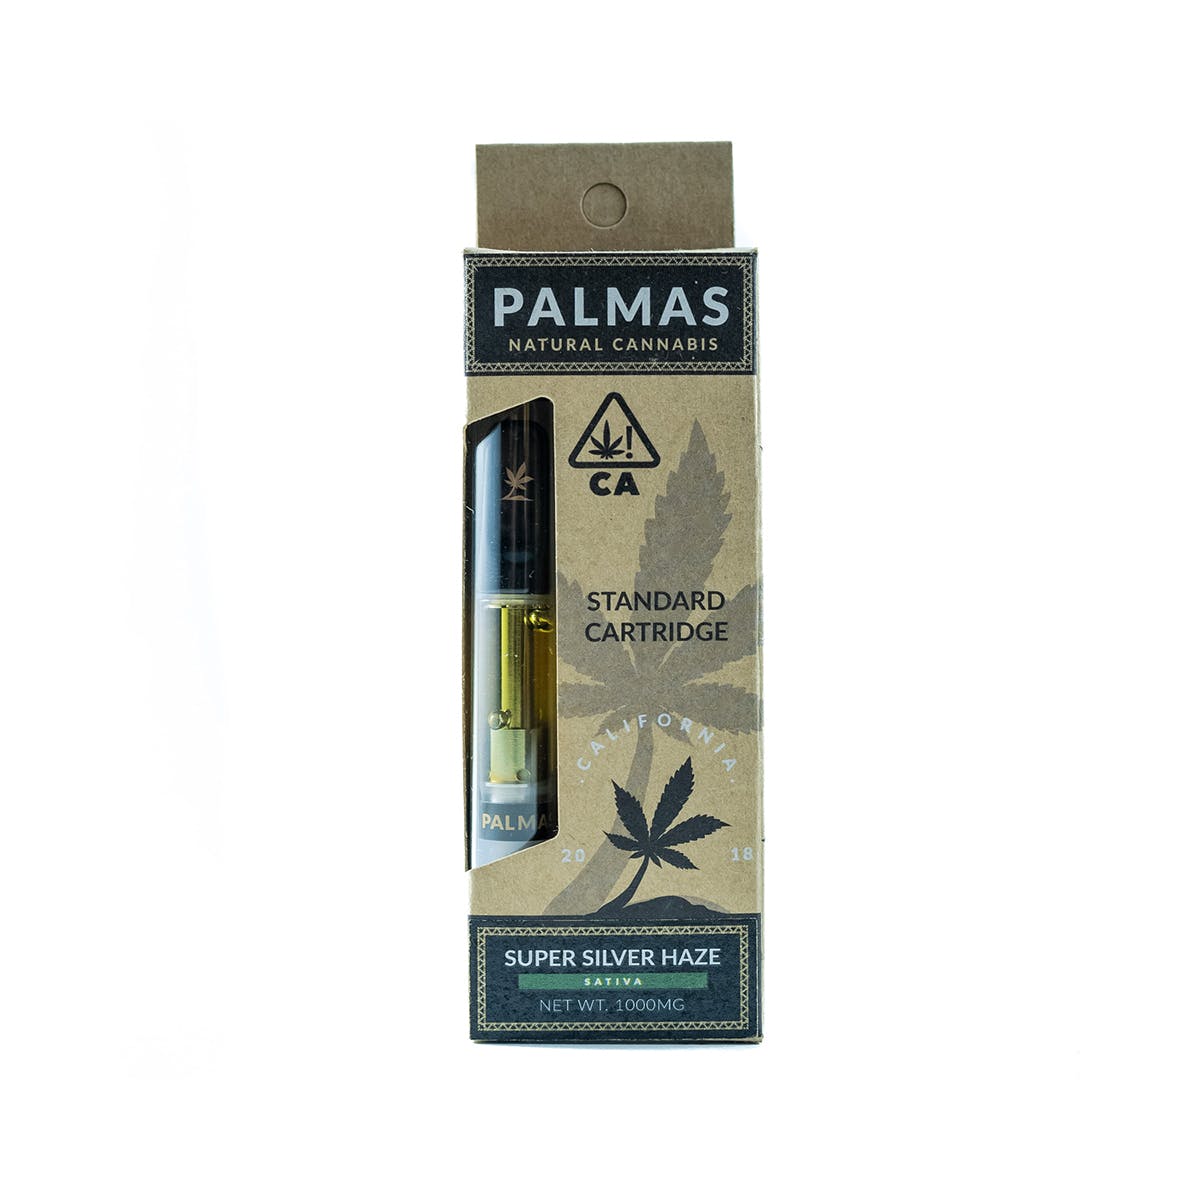 marijuana-dispensaries-straight-up-20-in-compton-palmas-standard-cartridge-super-silver-haze